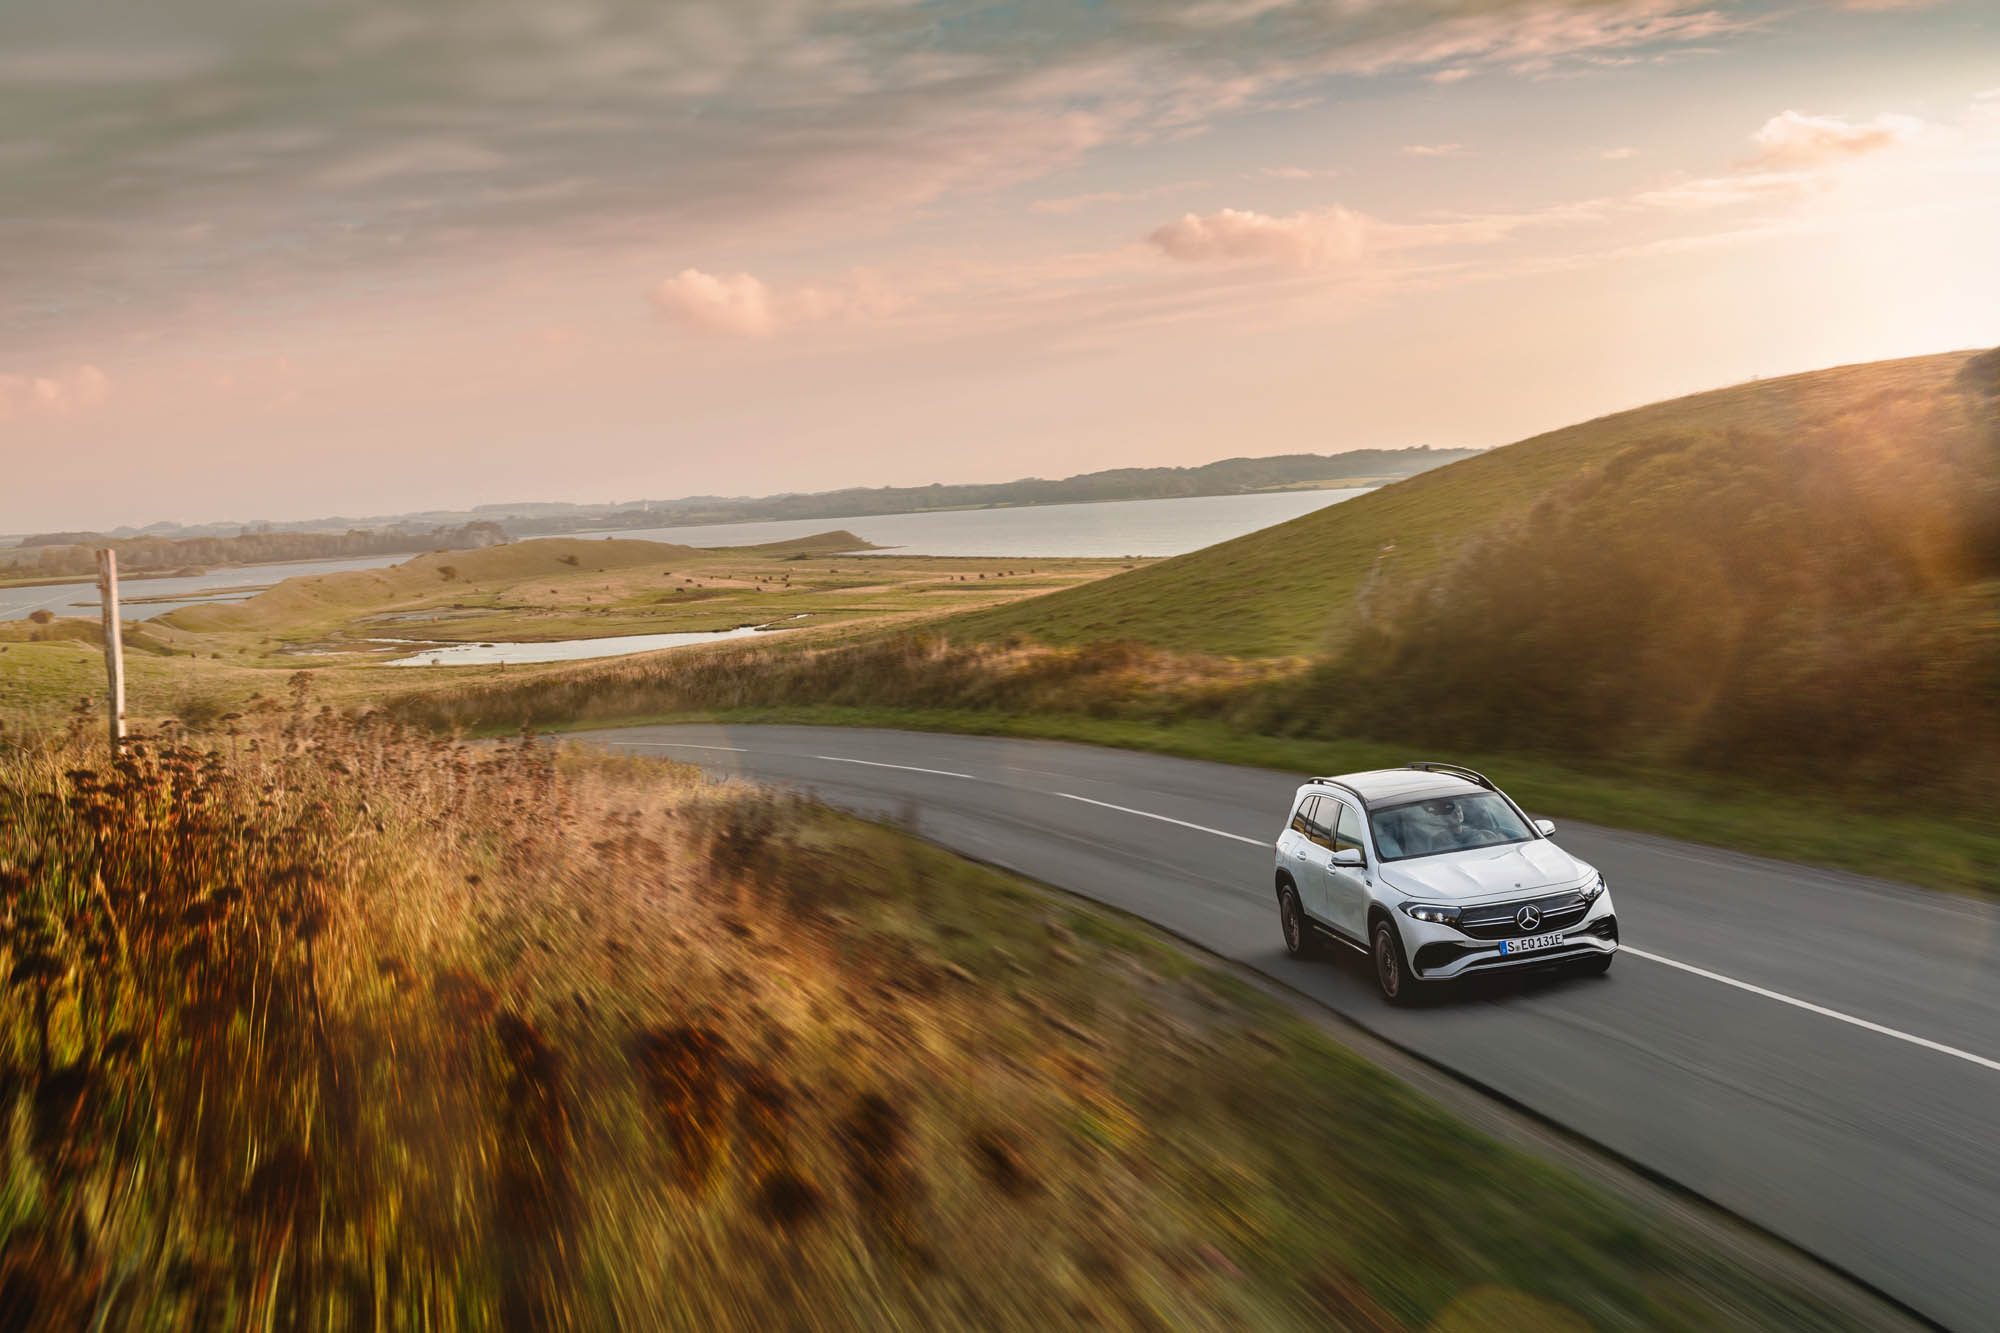 Mercedes-EQ, EQB, 2021; Edition 1, Farbe digitalweiß, Interieur: nevagrau; EQB 350 4MATIC (Stromverbrauch kombiniert: 16,2 kWh/100 km; CO2-Emissionen kombiniert: 0 g/km);Stromverbrauch kombiniert: 16,2 kWh/100 km; CO2-Emissionen kombiniert: 0 g/km* Mercedes-EQ, EQB, 2021; Edition 1, digital white, interior: neva grey; EQB 350 (combined power consumption: 16.2 kWh/100 km, combined CO2 emissions: 0 g/km);Combined power consumption: 16.2 kWh/100 km, combined CO2 emissions: 0 g/km*